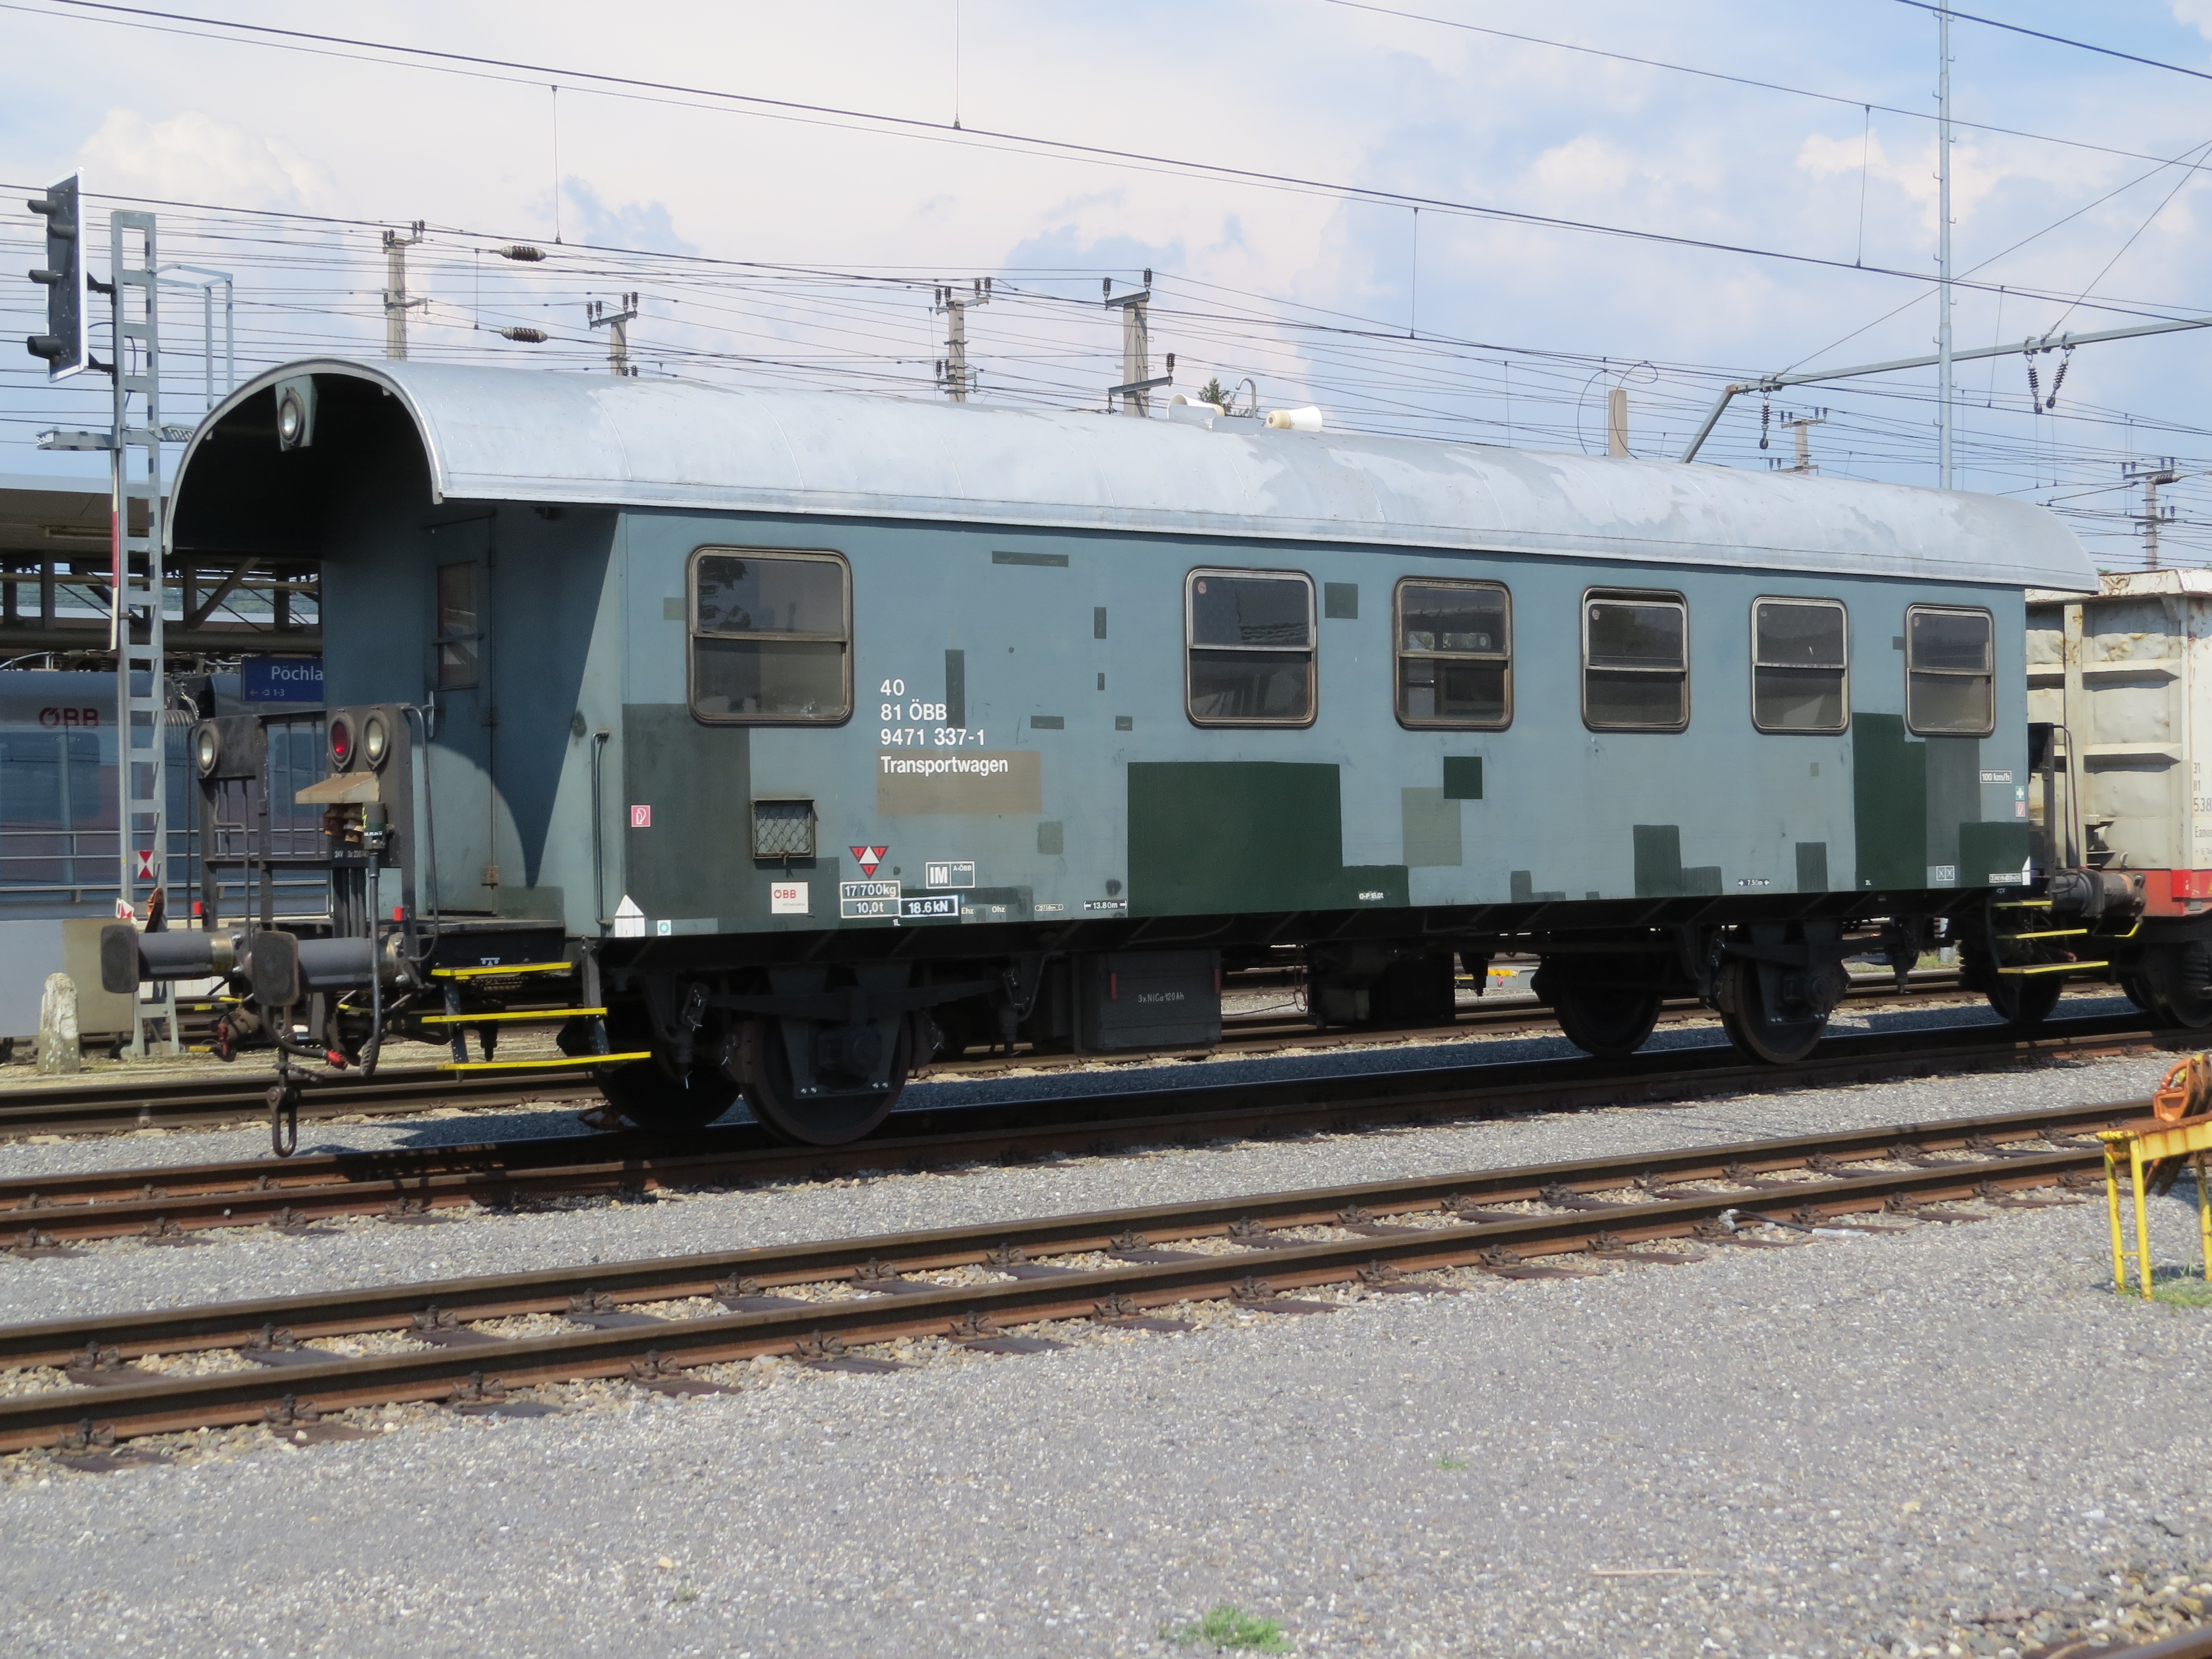 2018-07-17 (410) 40 81 9471 337-1 at Bahnhof Pöchlarn